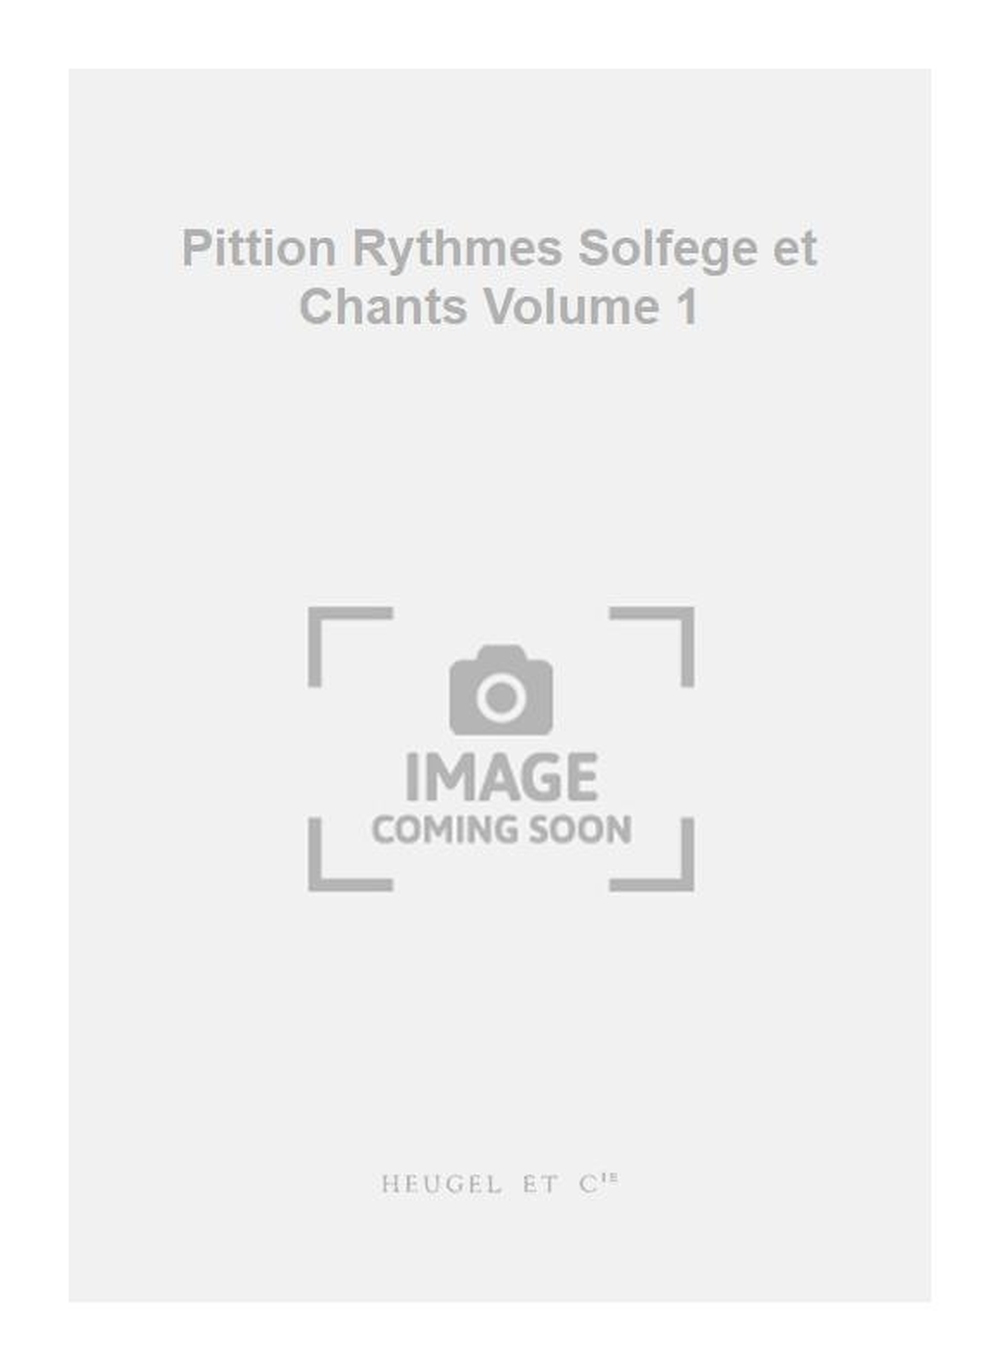 Pittion: Pittion Rythmes Solfege et Chants Volume 1